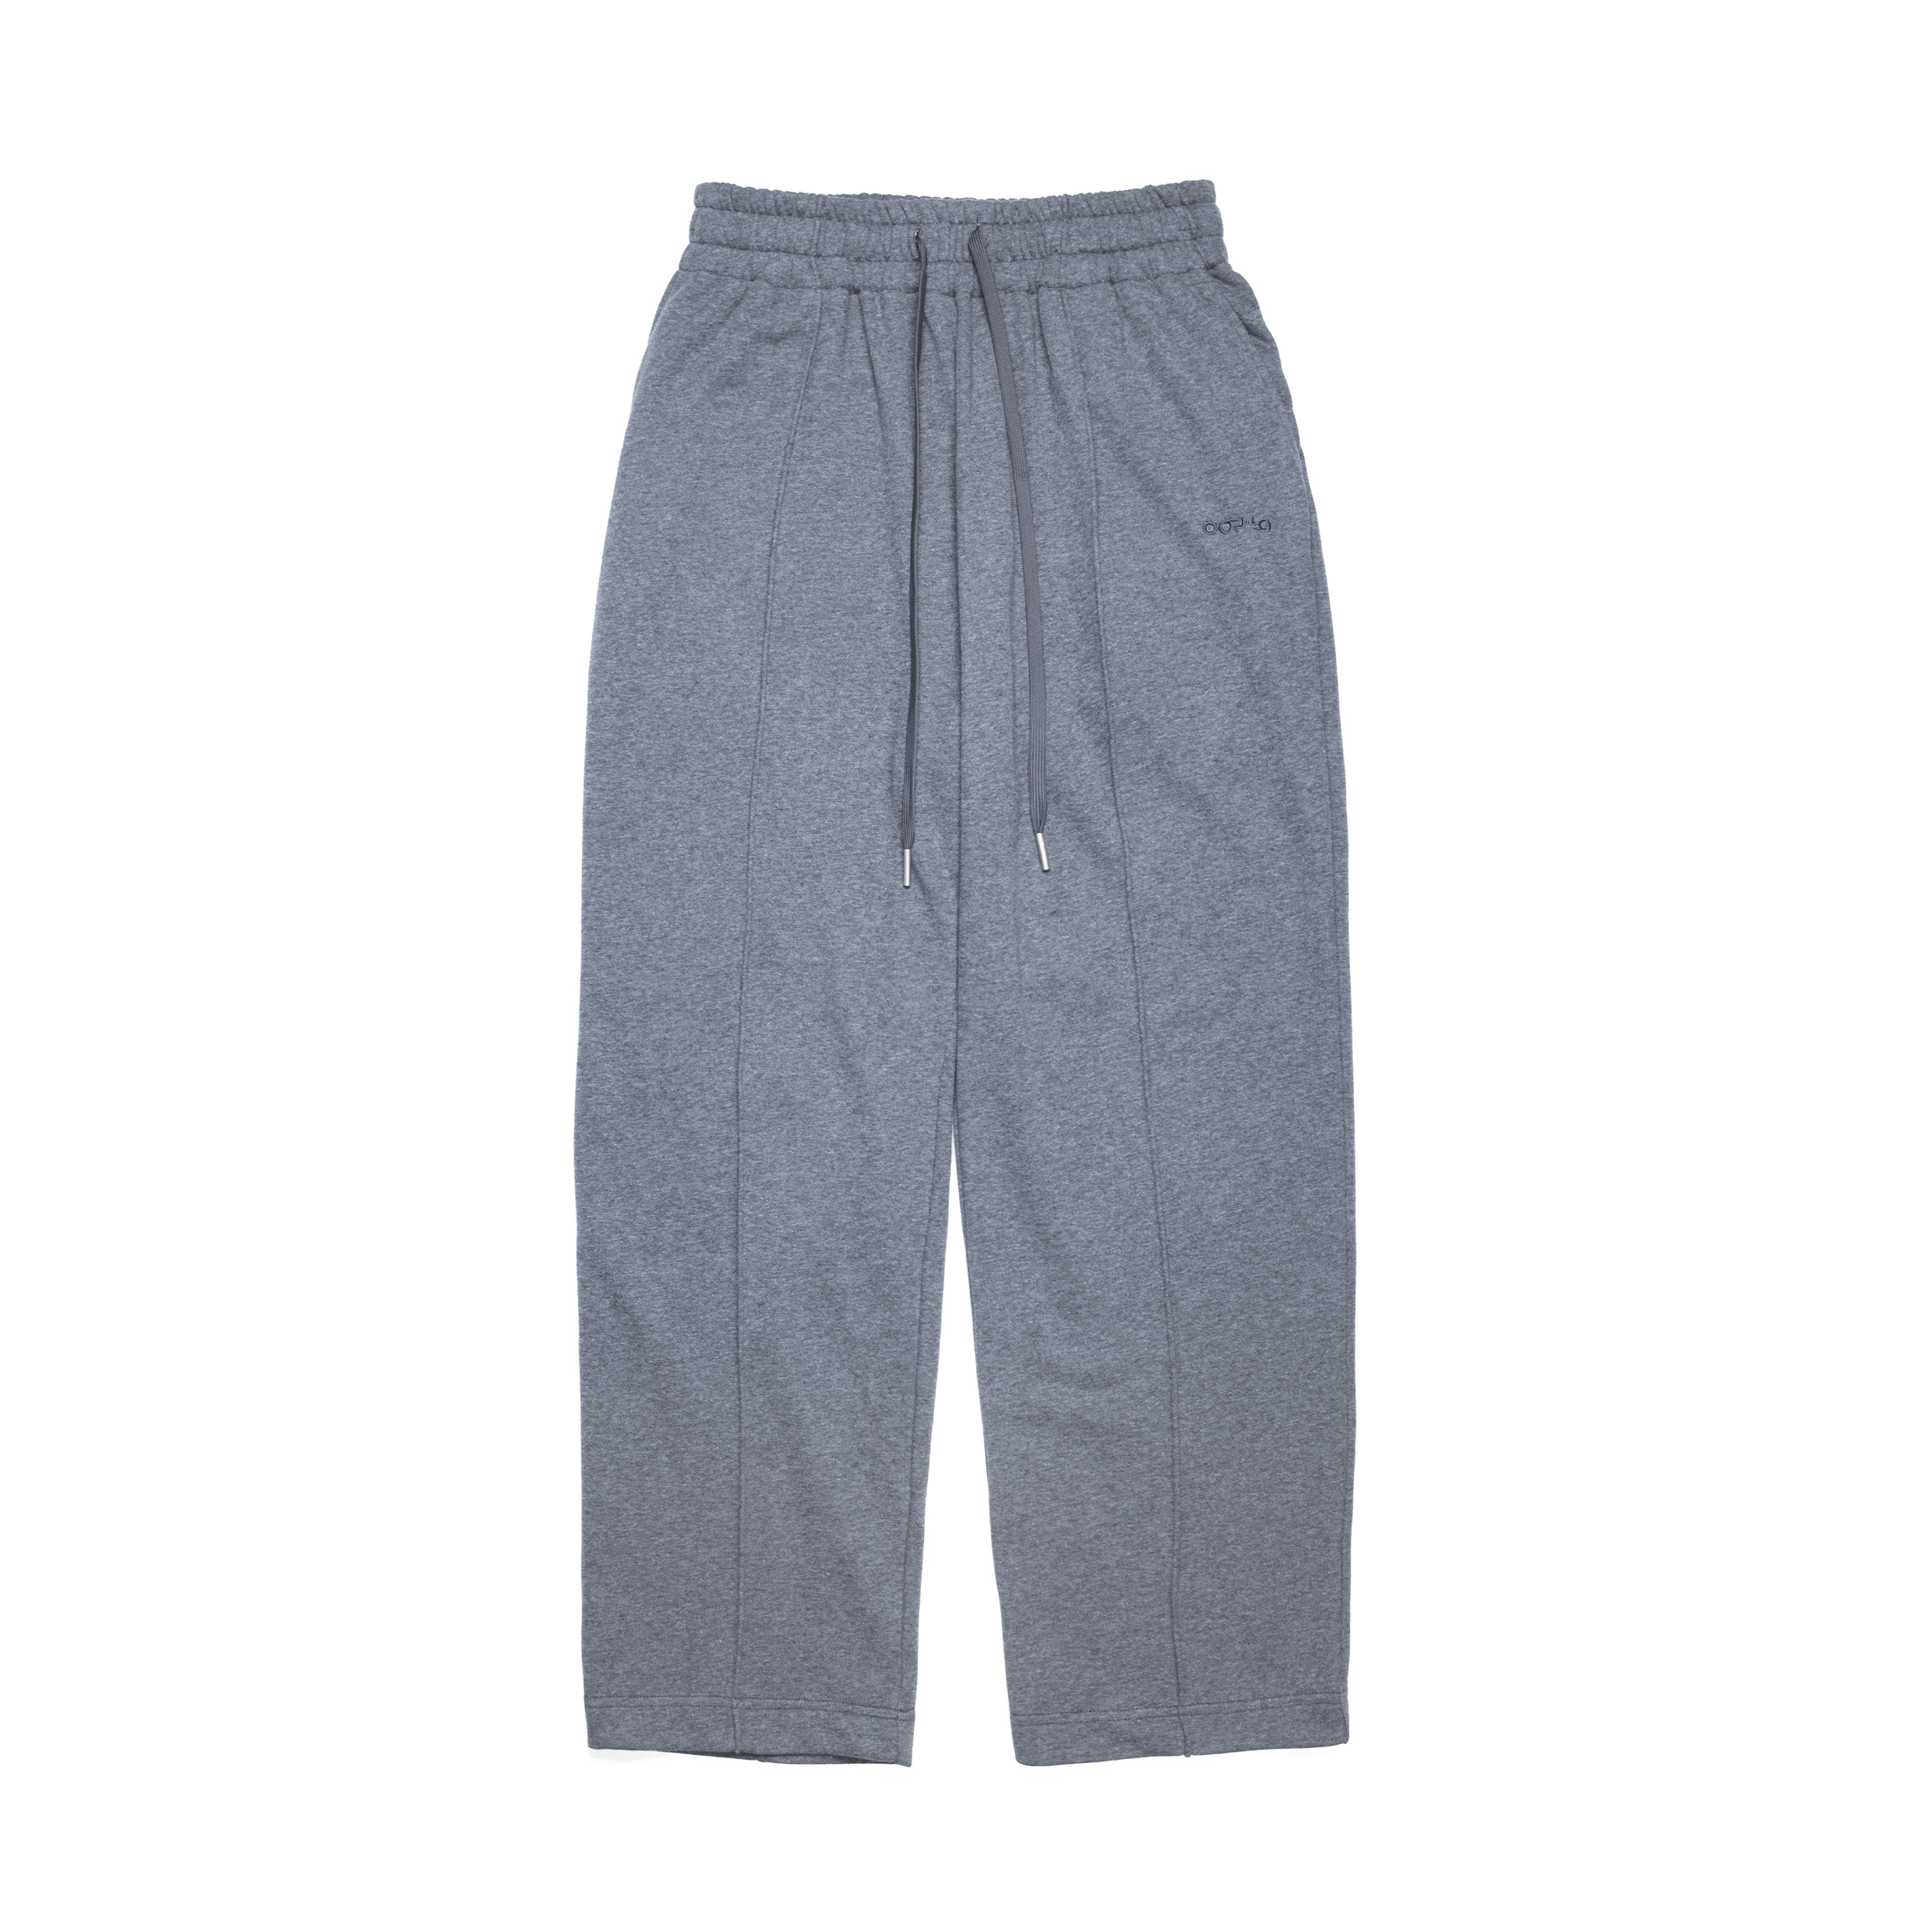 oqLiq Drawstring Sweatpants - Gray